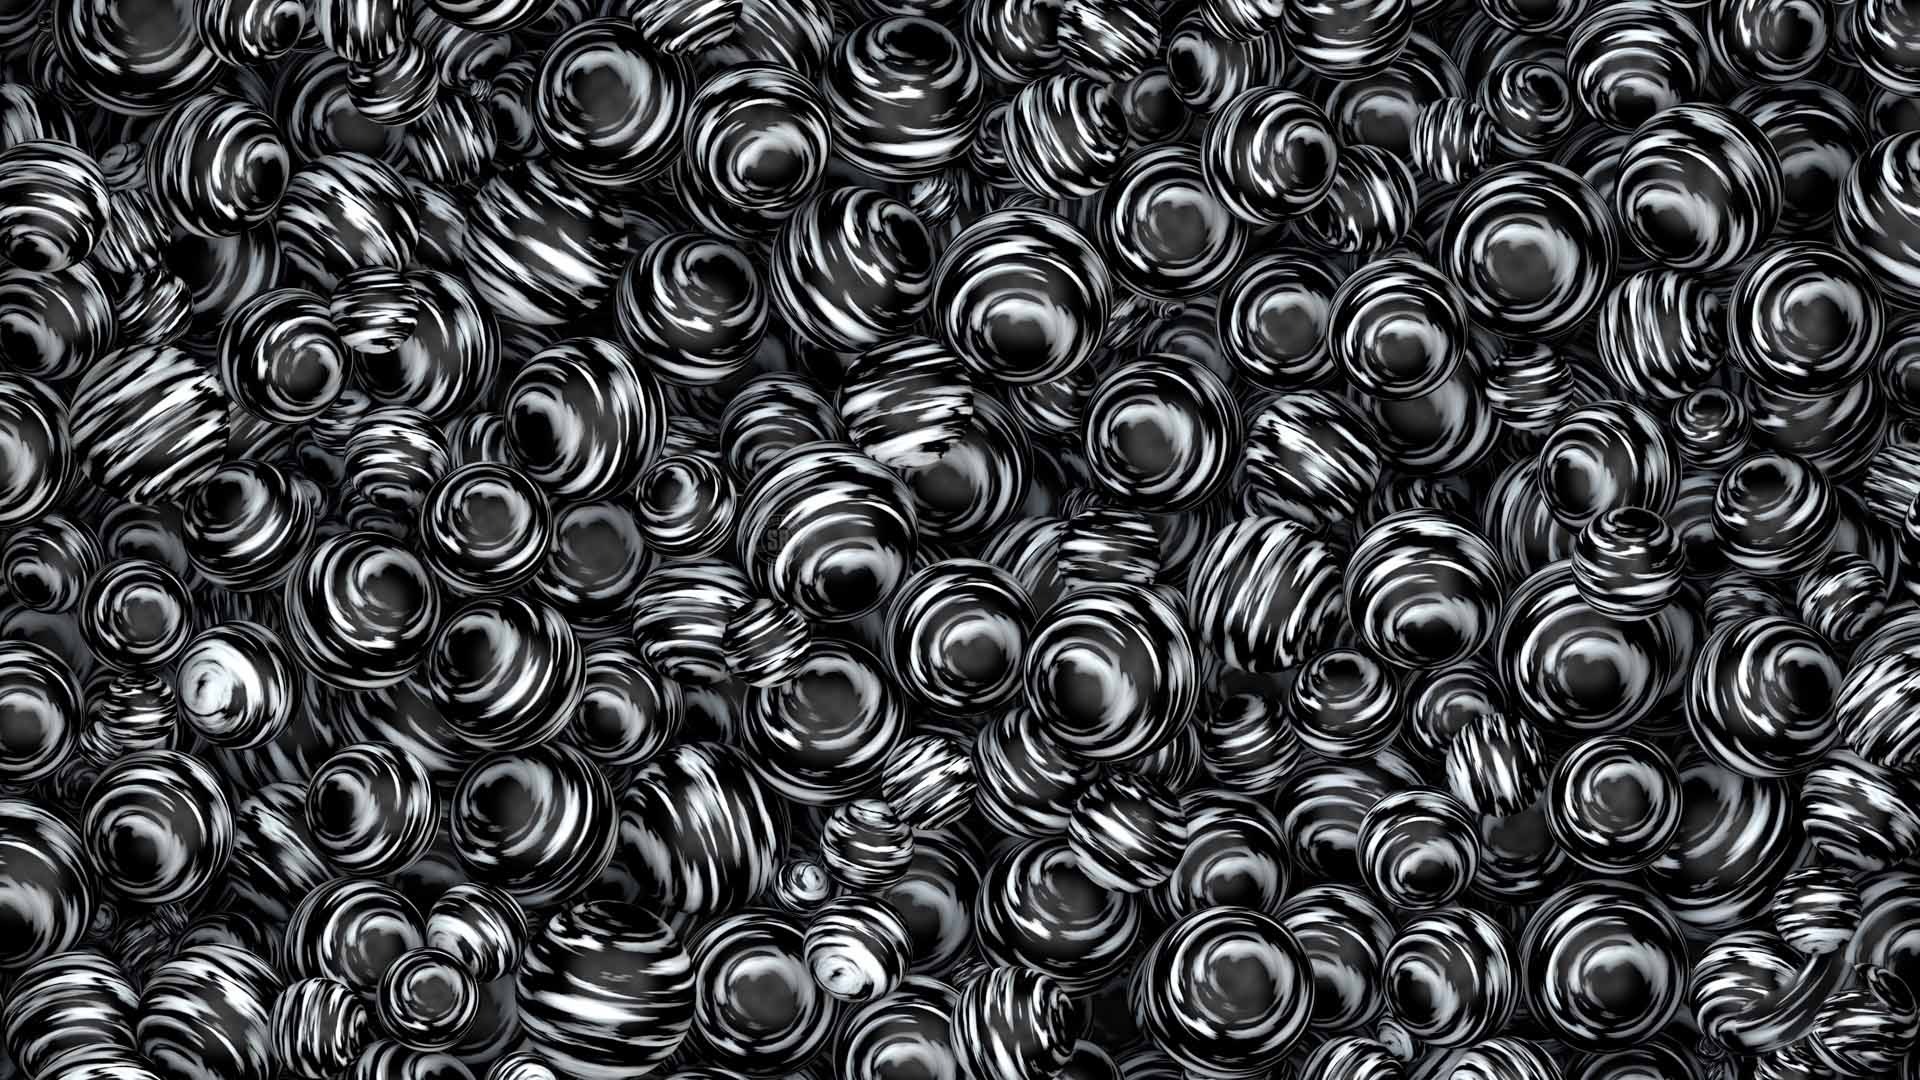 Abstract-Black-Ball-Big-Screen-Wallpaper-Art-Image-1920x1080.jpg